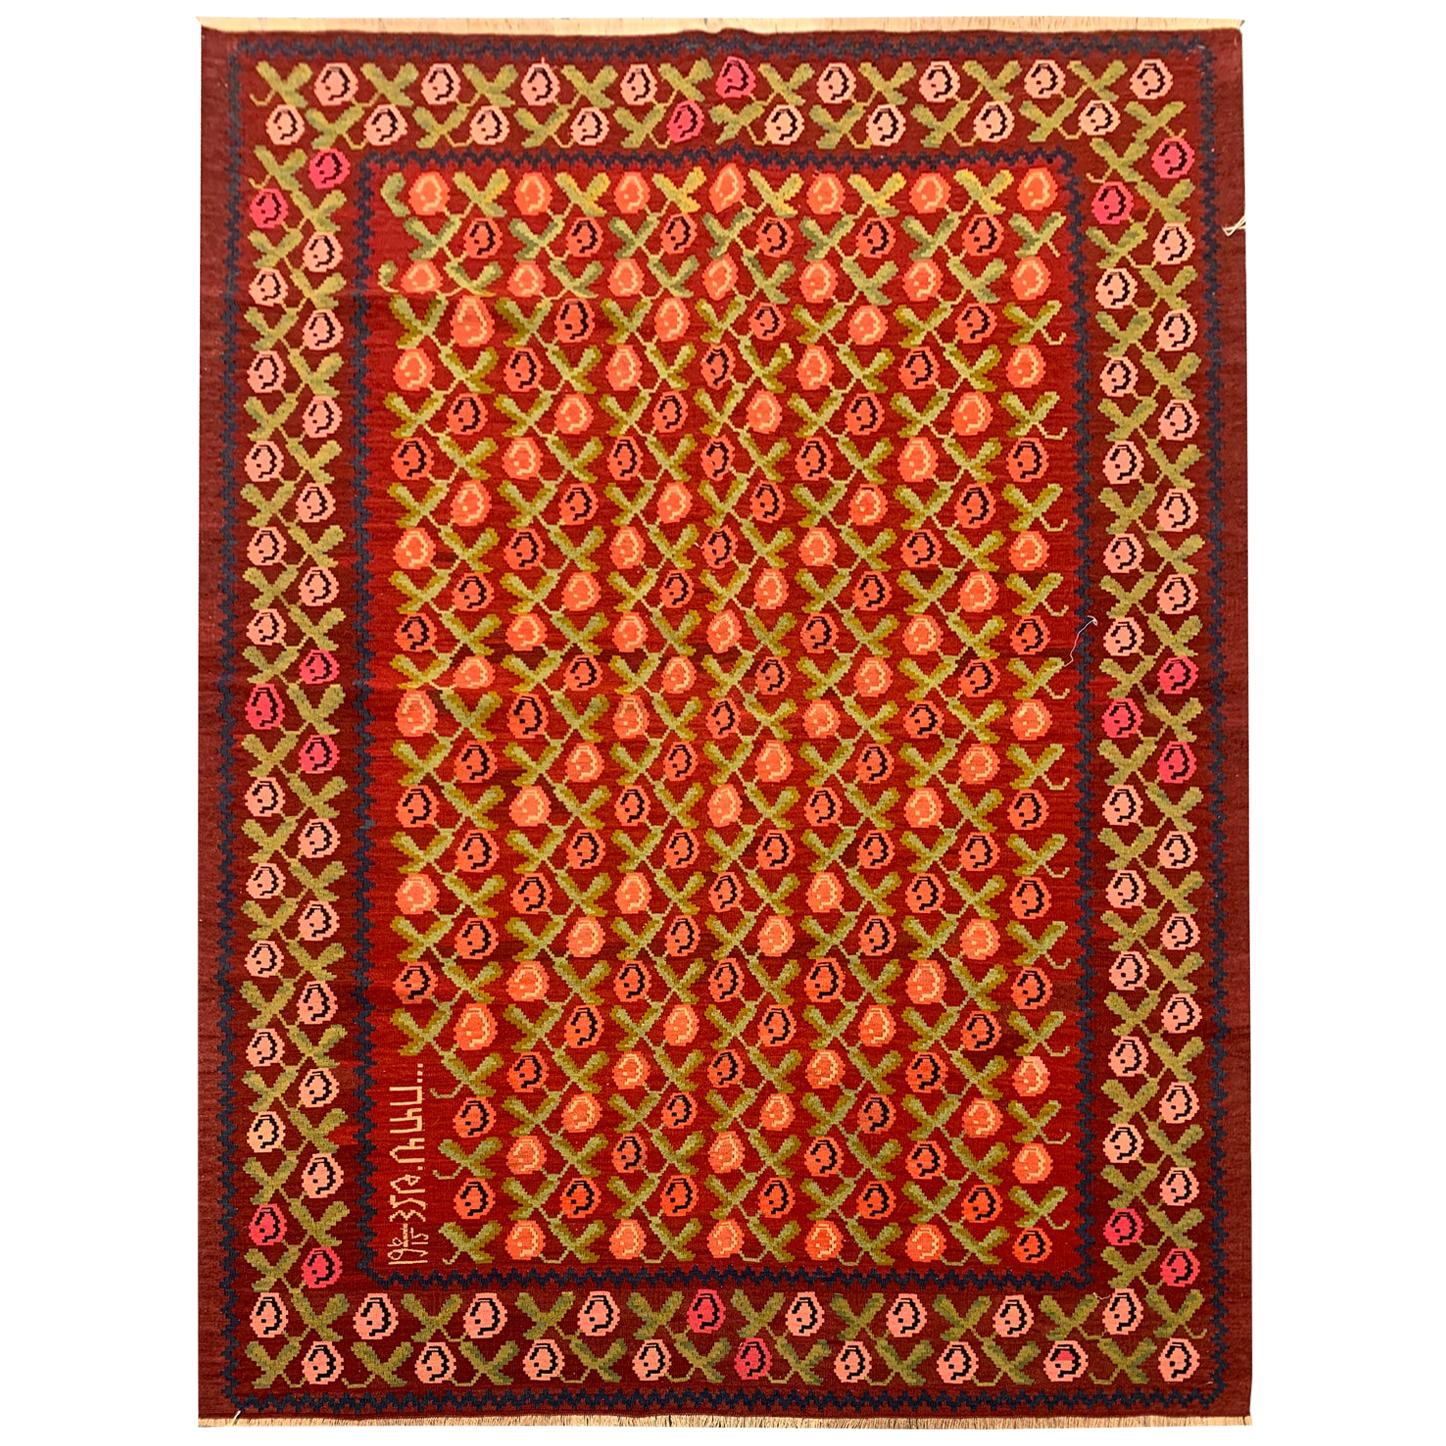 Antique Kilim Rugs Armenian Handmade Floral Kilim Red Wool Rug